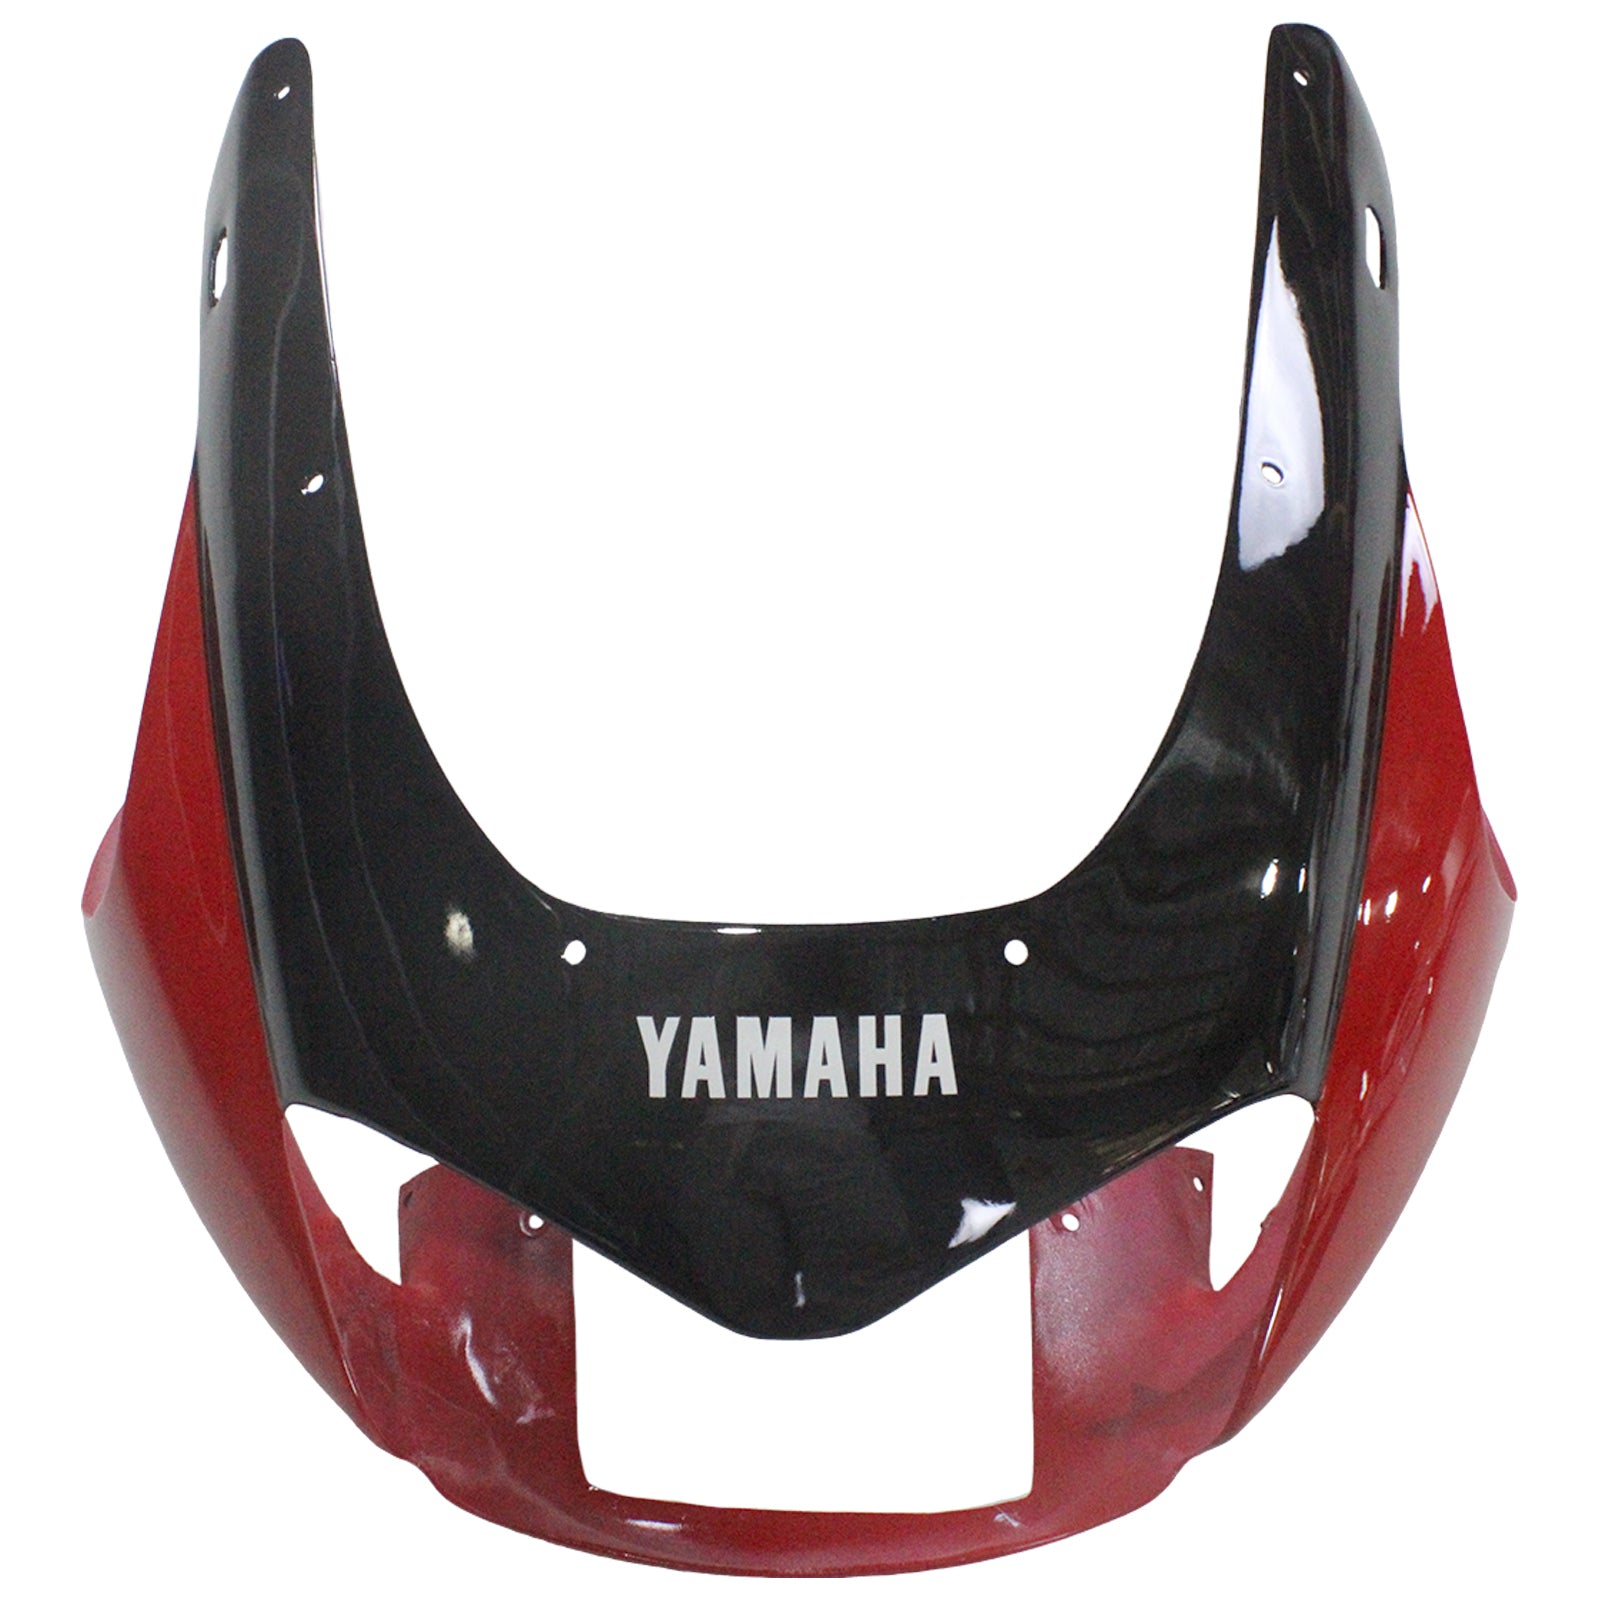 Amotopart 1997–2007 Yamaha YZF1000R Thunderace Verkleidung, Rot und Schwarz, Style1-Kit